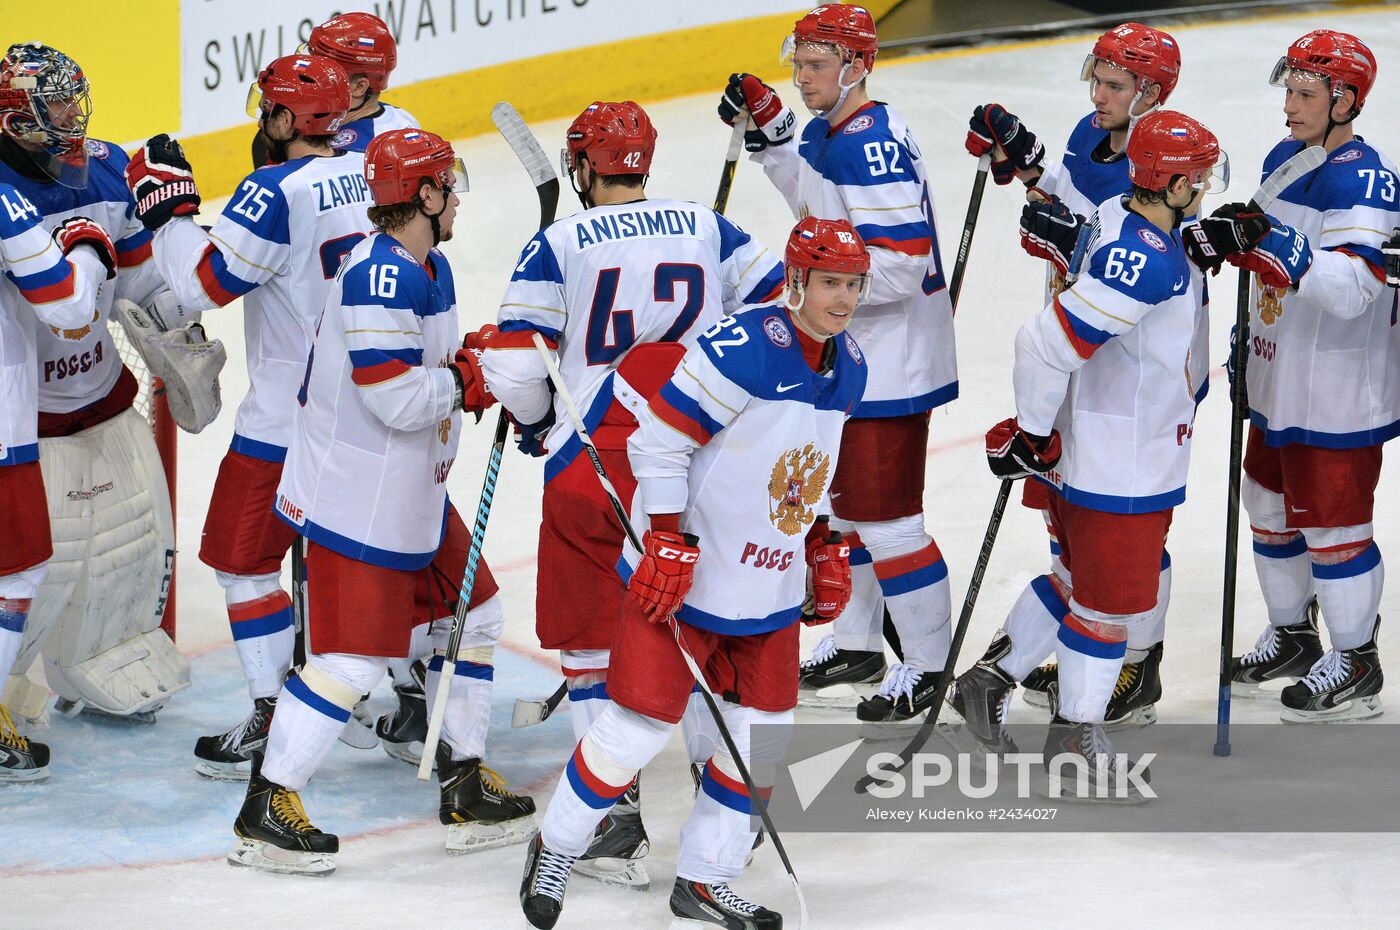 2014 IIHF Ice Hockey World Championship. Russia vs. Belarus